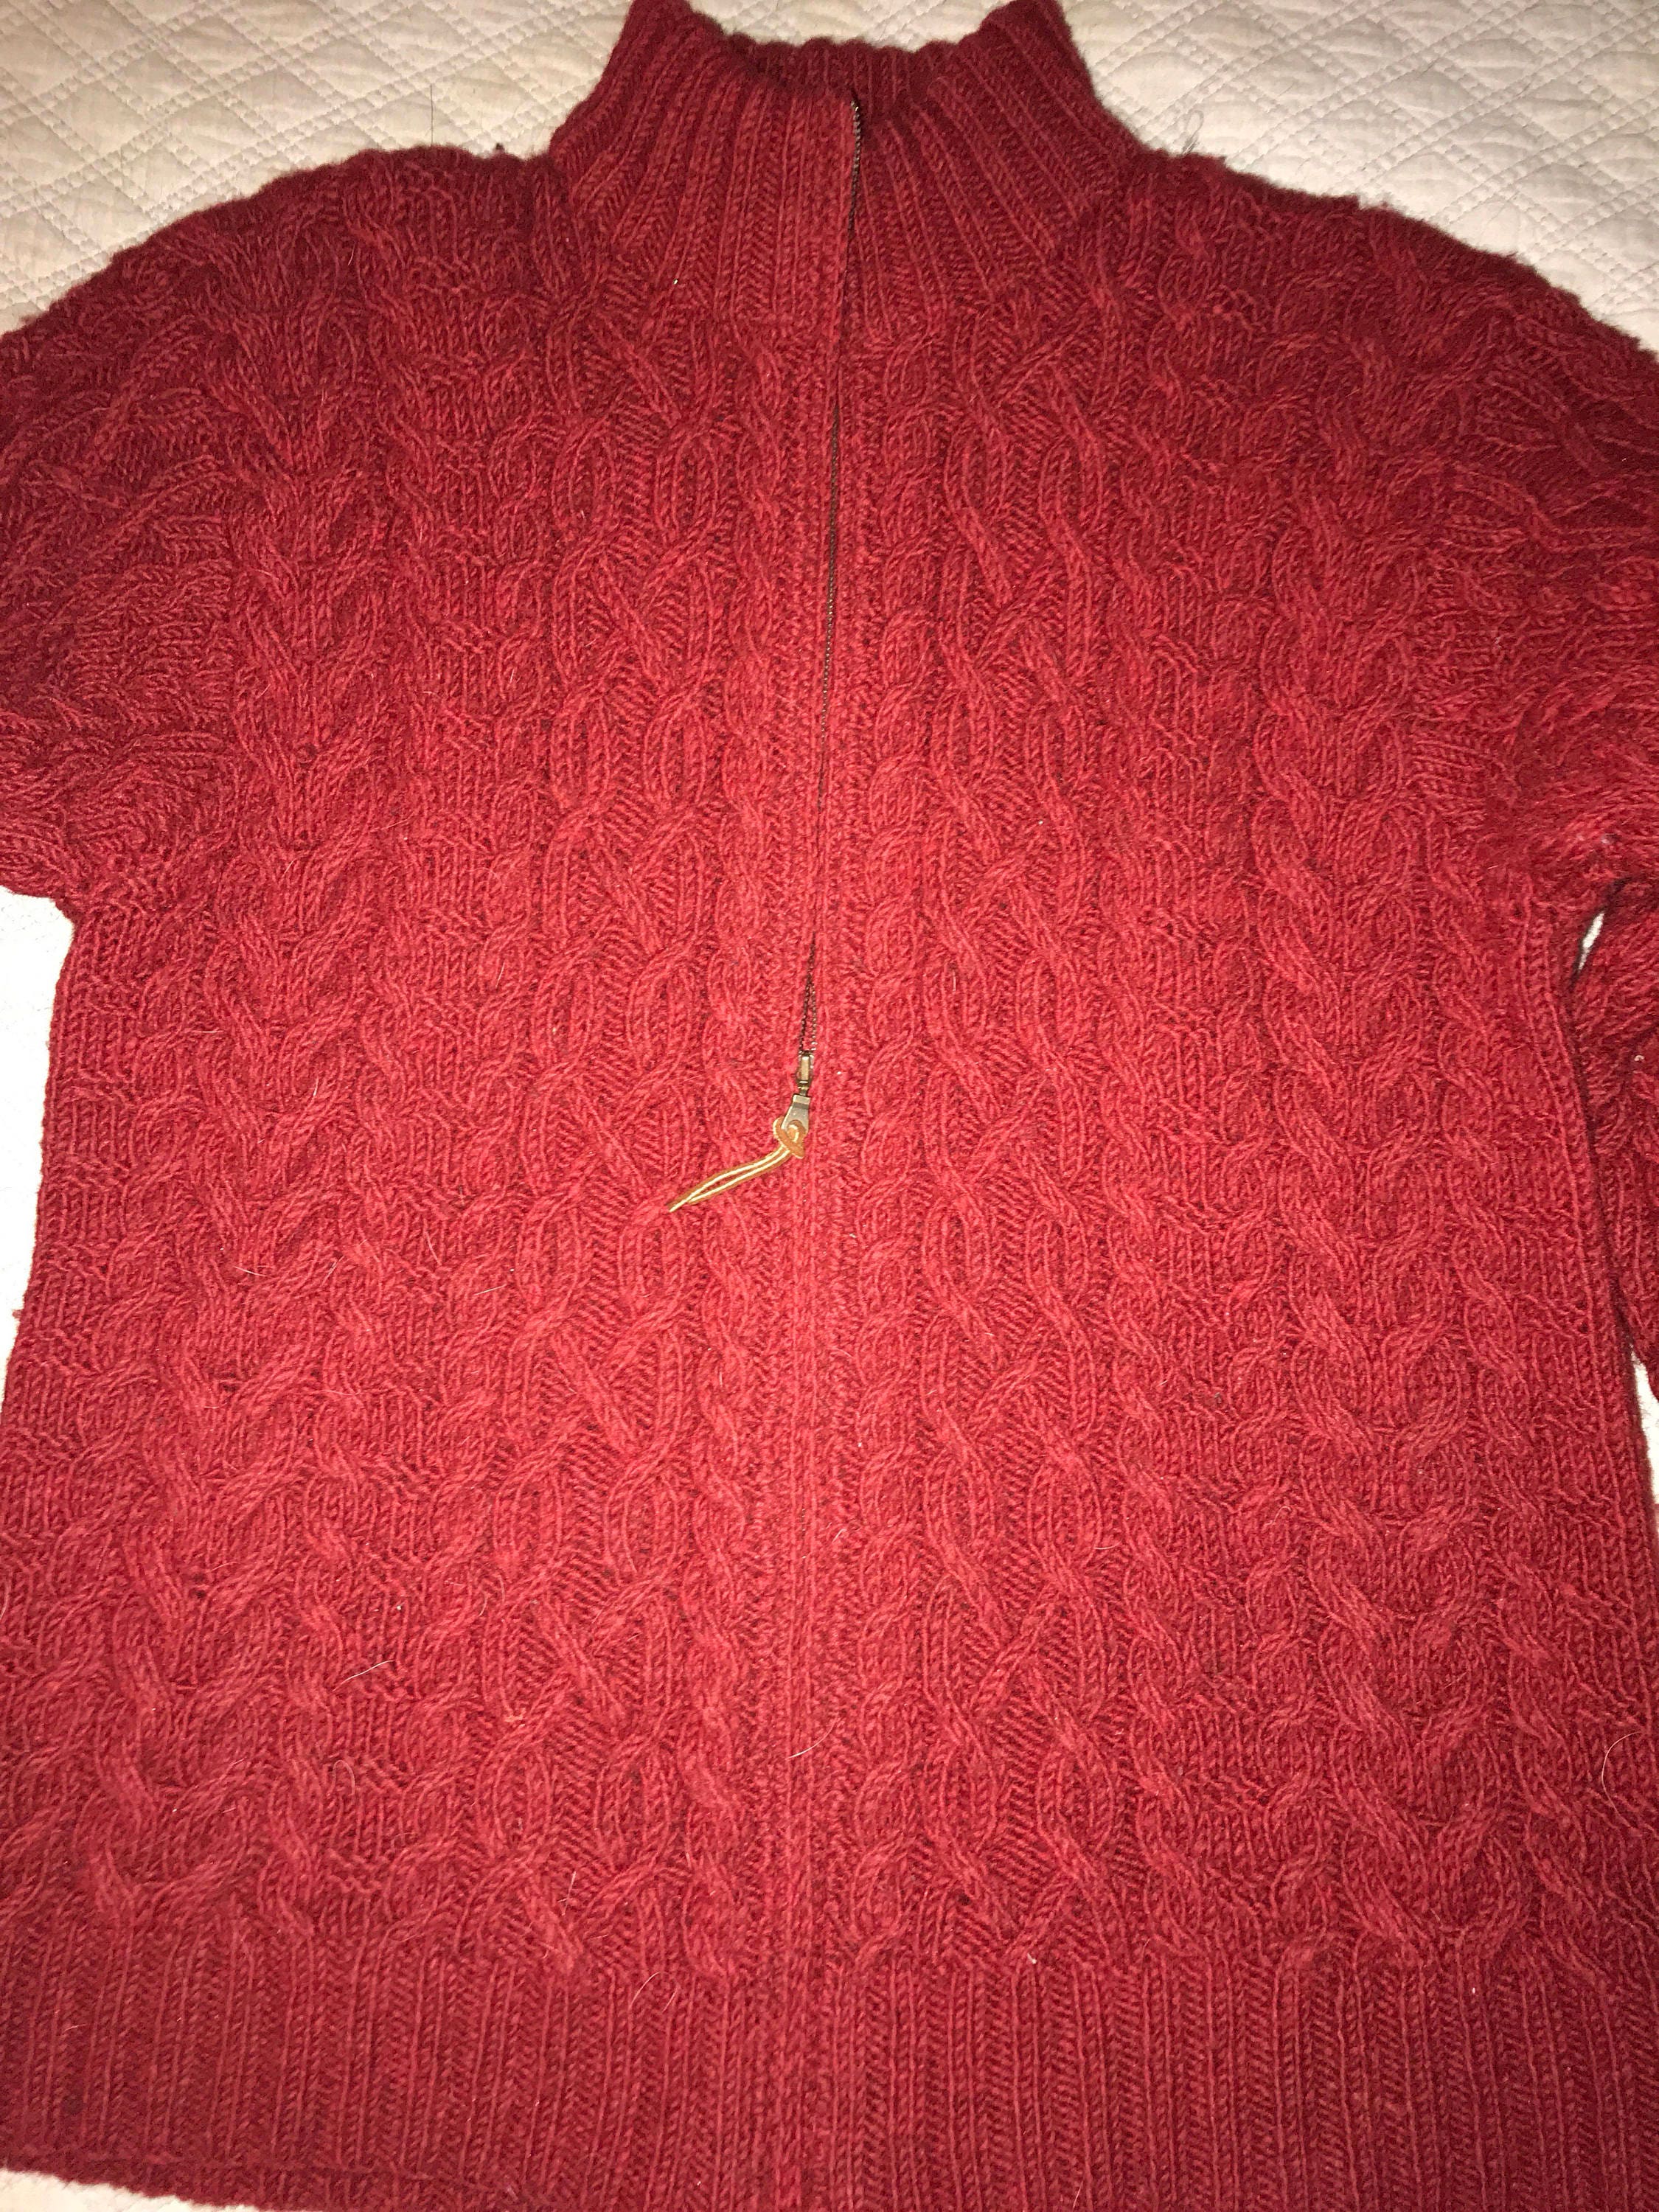 Vintage Ralph Lauren Wool Sweater. Hand Knit Wool Sweater. Ralph Lauren ...